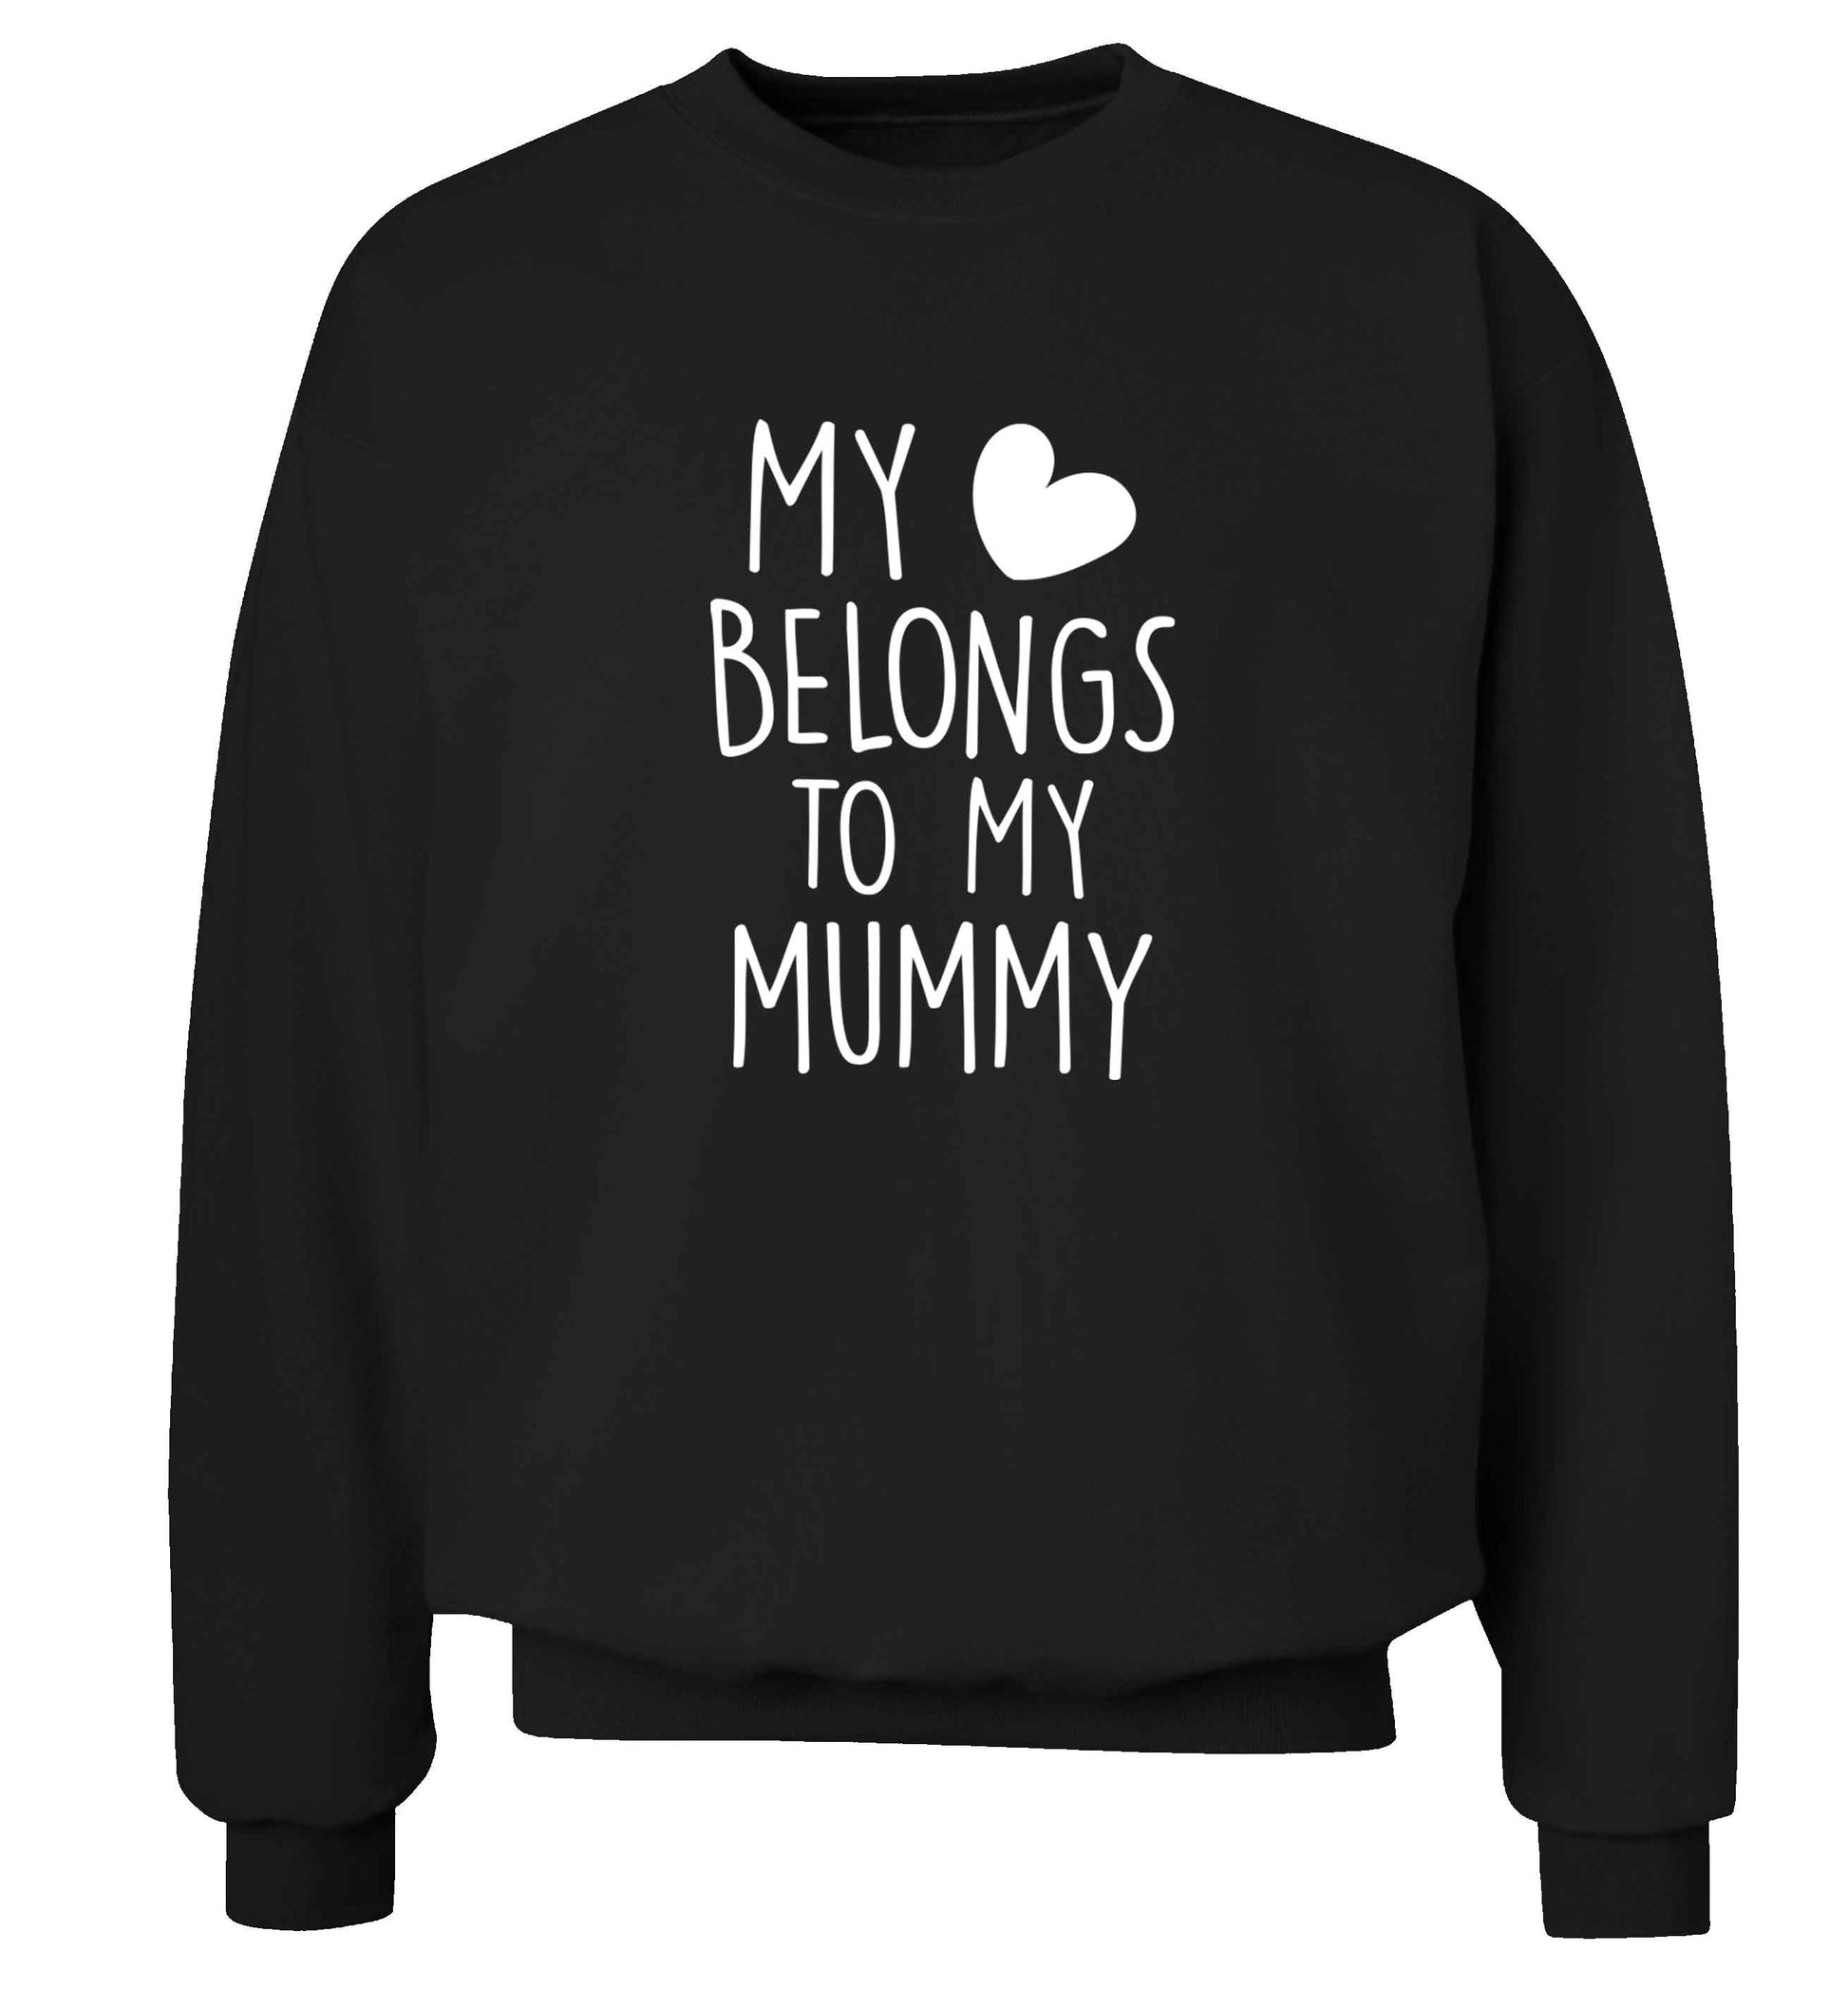 My heart belongs to my mummy adult's unisex black sweater 2XL